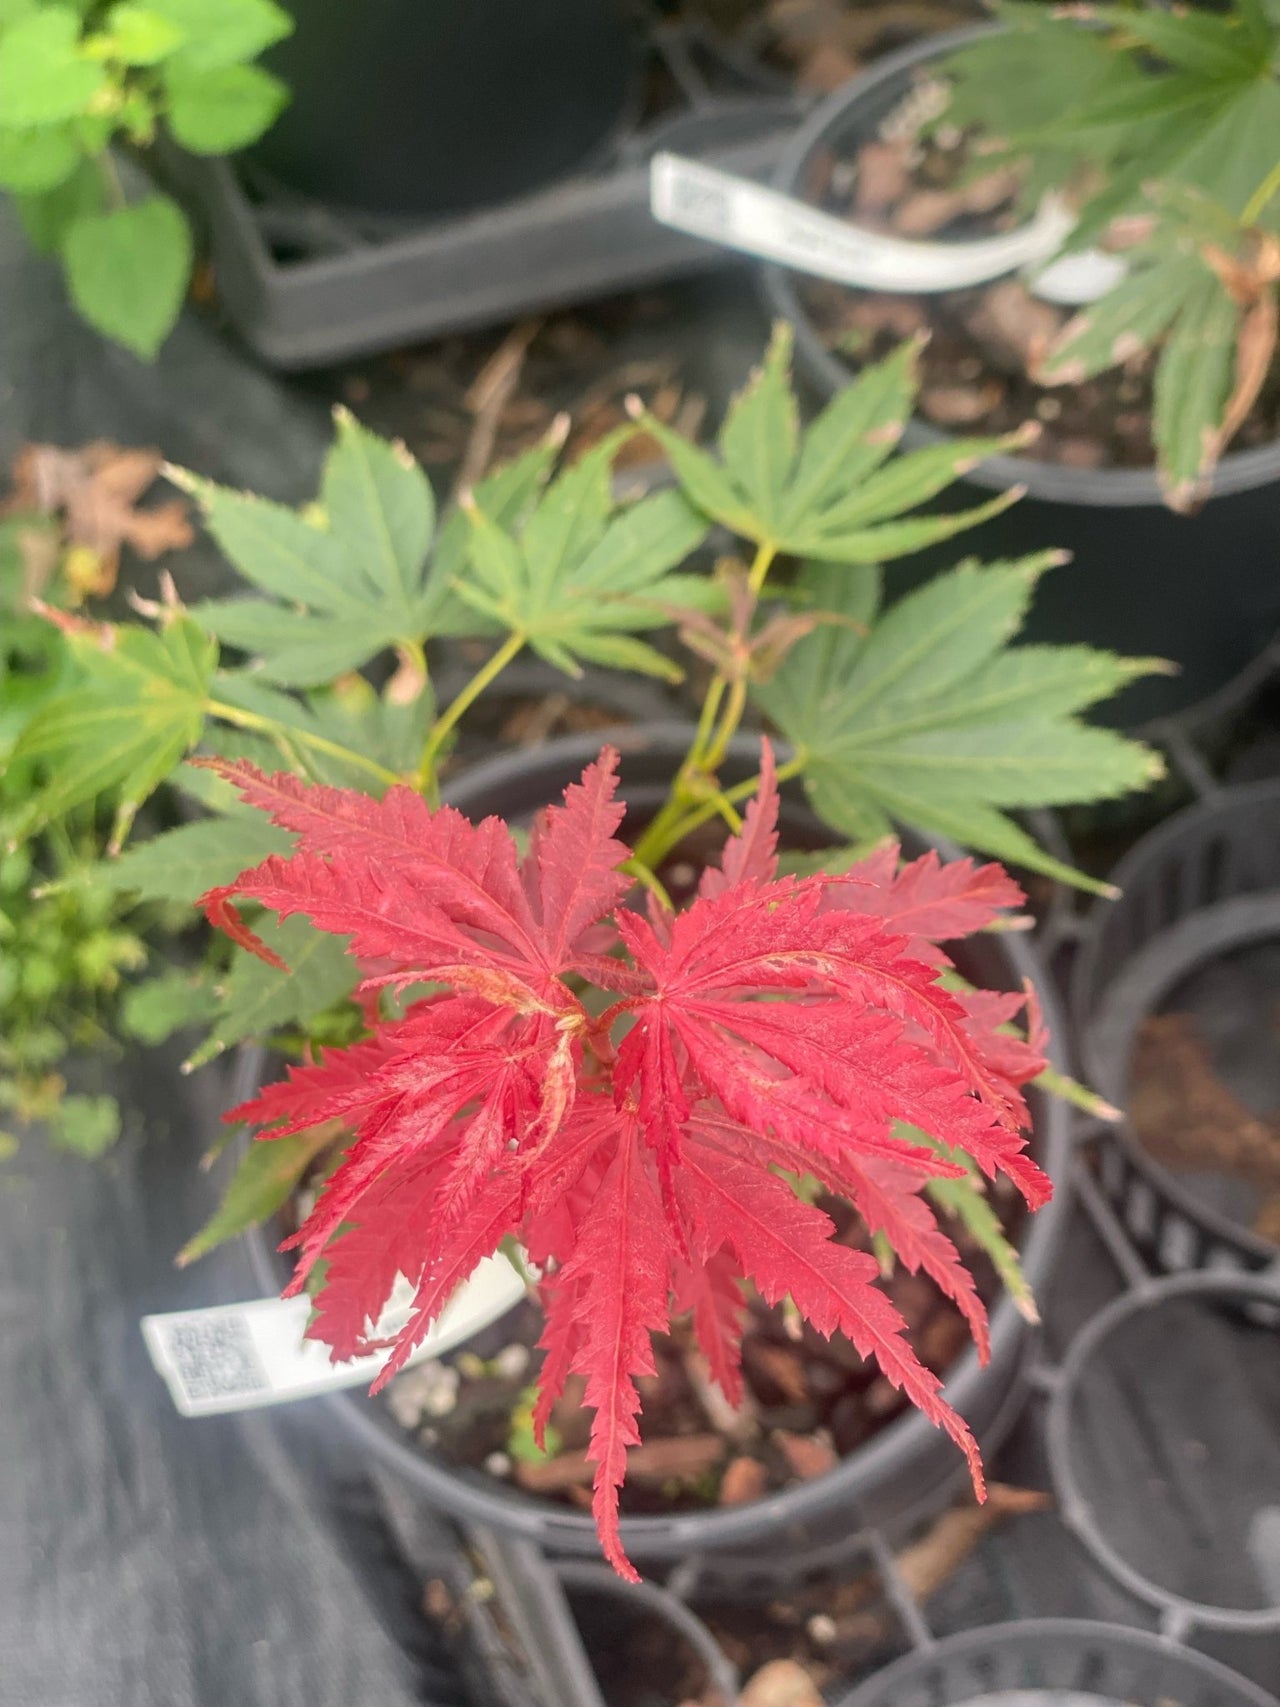 Acer palmatum 'Beni gasa' - Maple Ridge Nursery